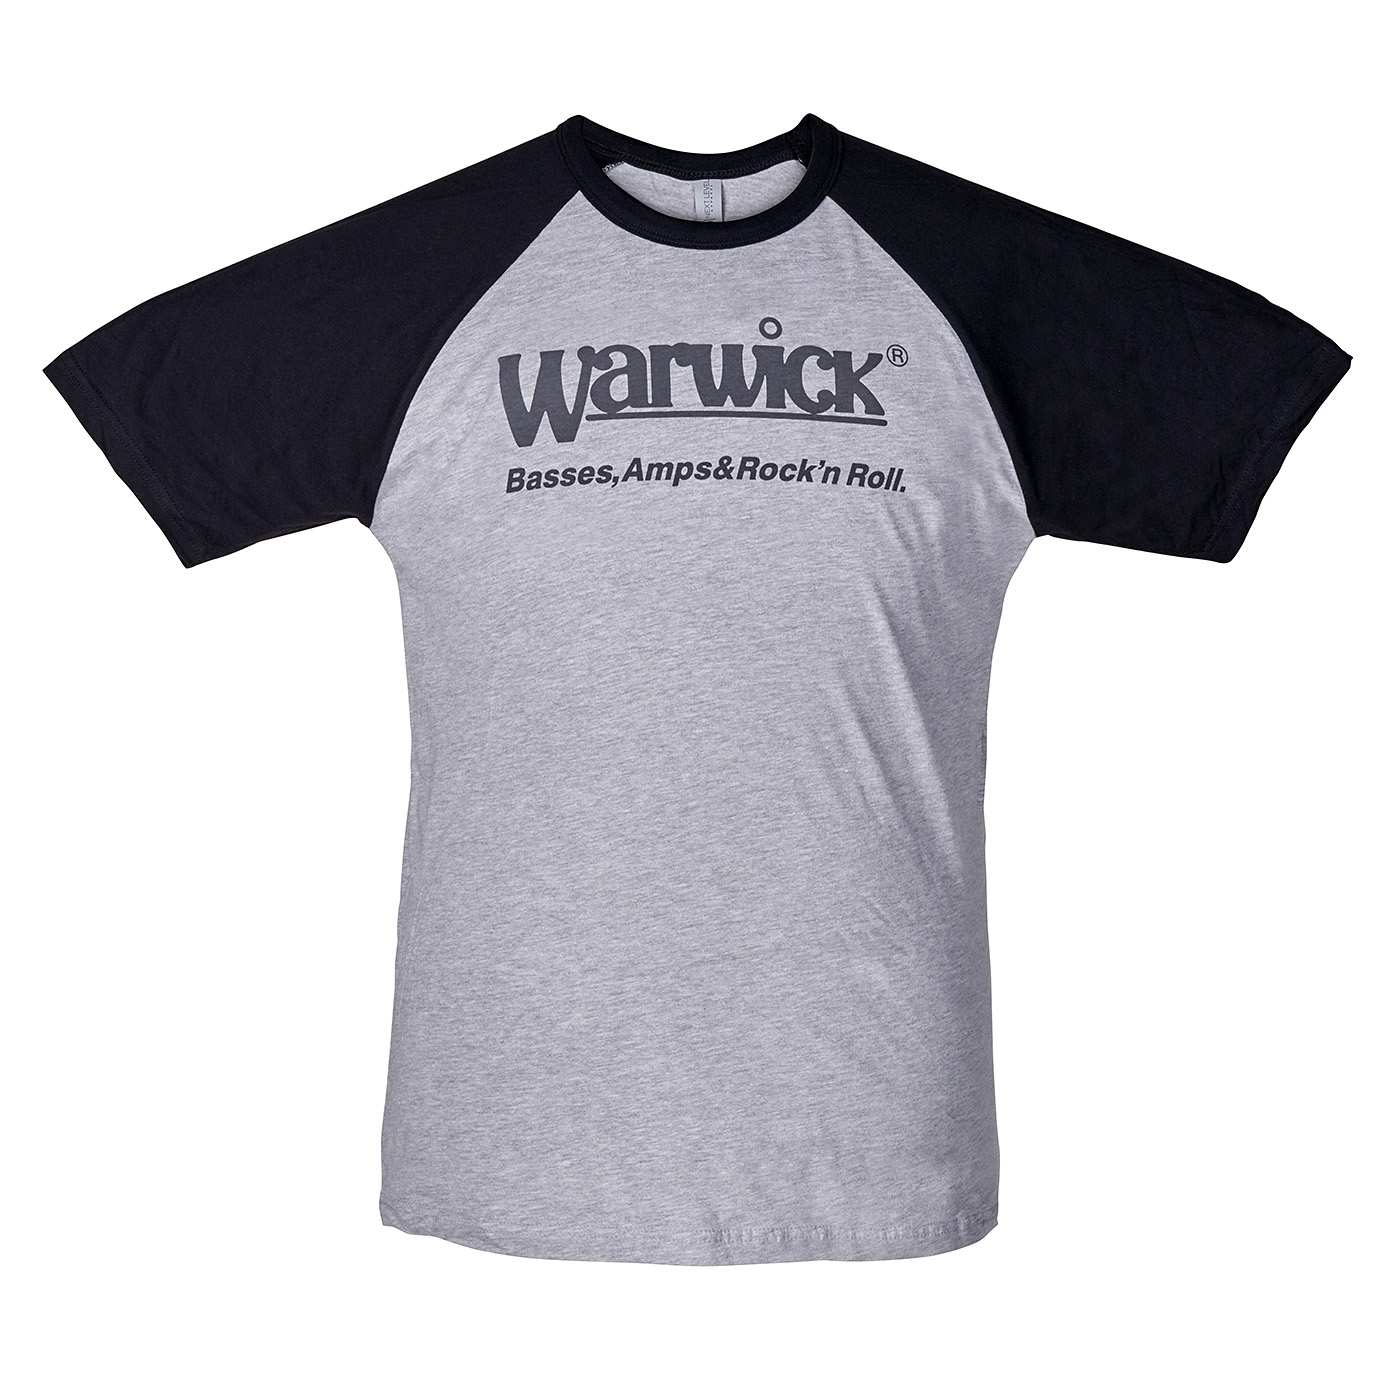 Warwick Promo - Basses, Amps & Rock'n'Roll Baseball T-Shirt, Gray/Black - Size M